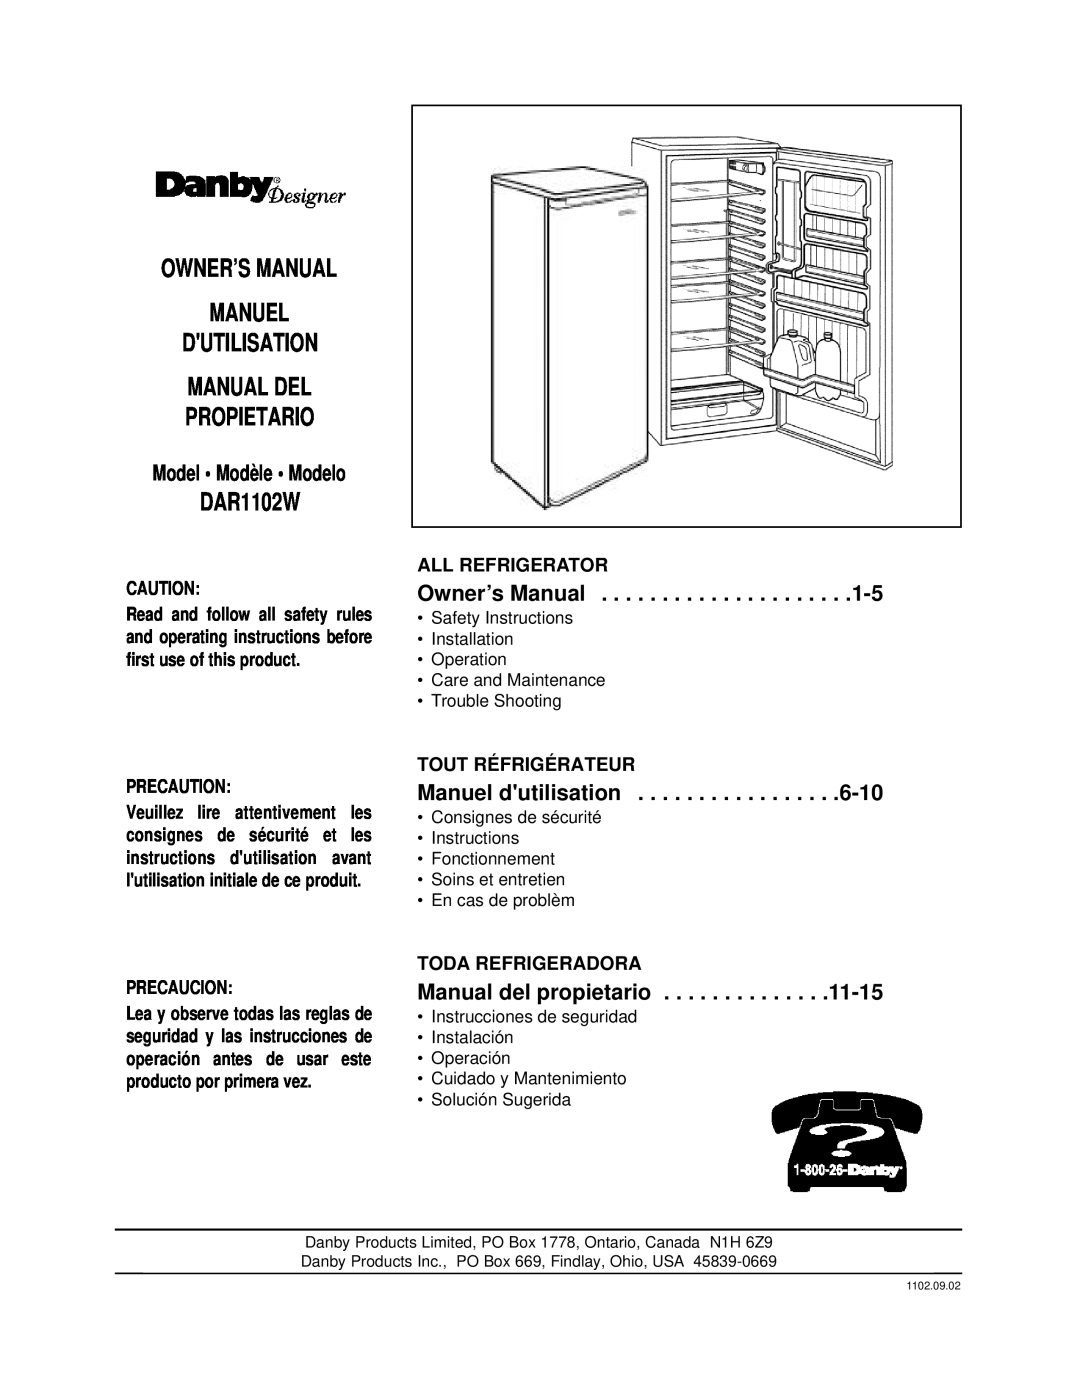 Danby DAR1102W manual Propietario, Model Modèle Modelo, Manual del propietario, Precaution, Precaucion, All Refrigerator 